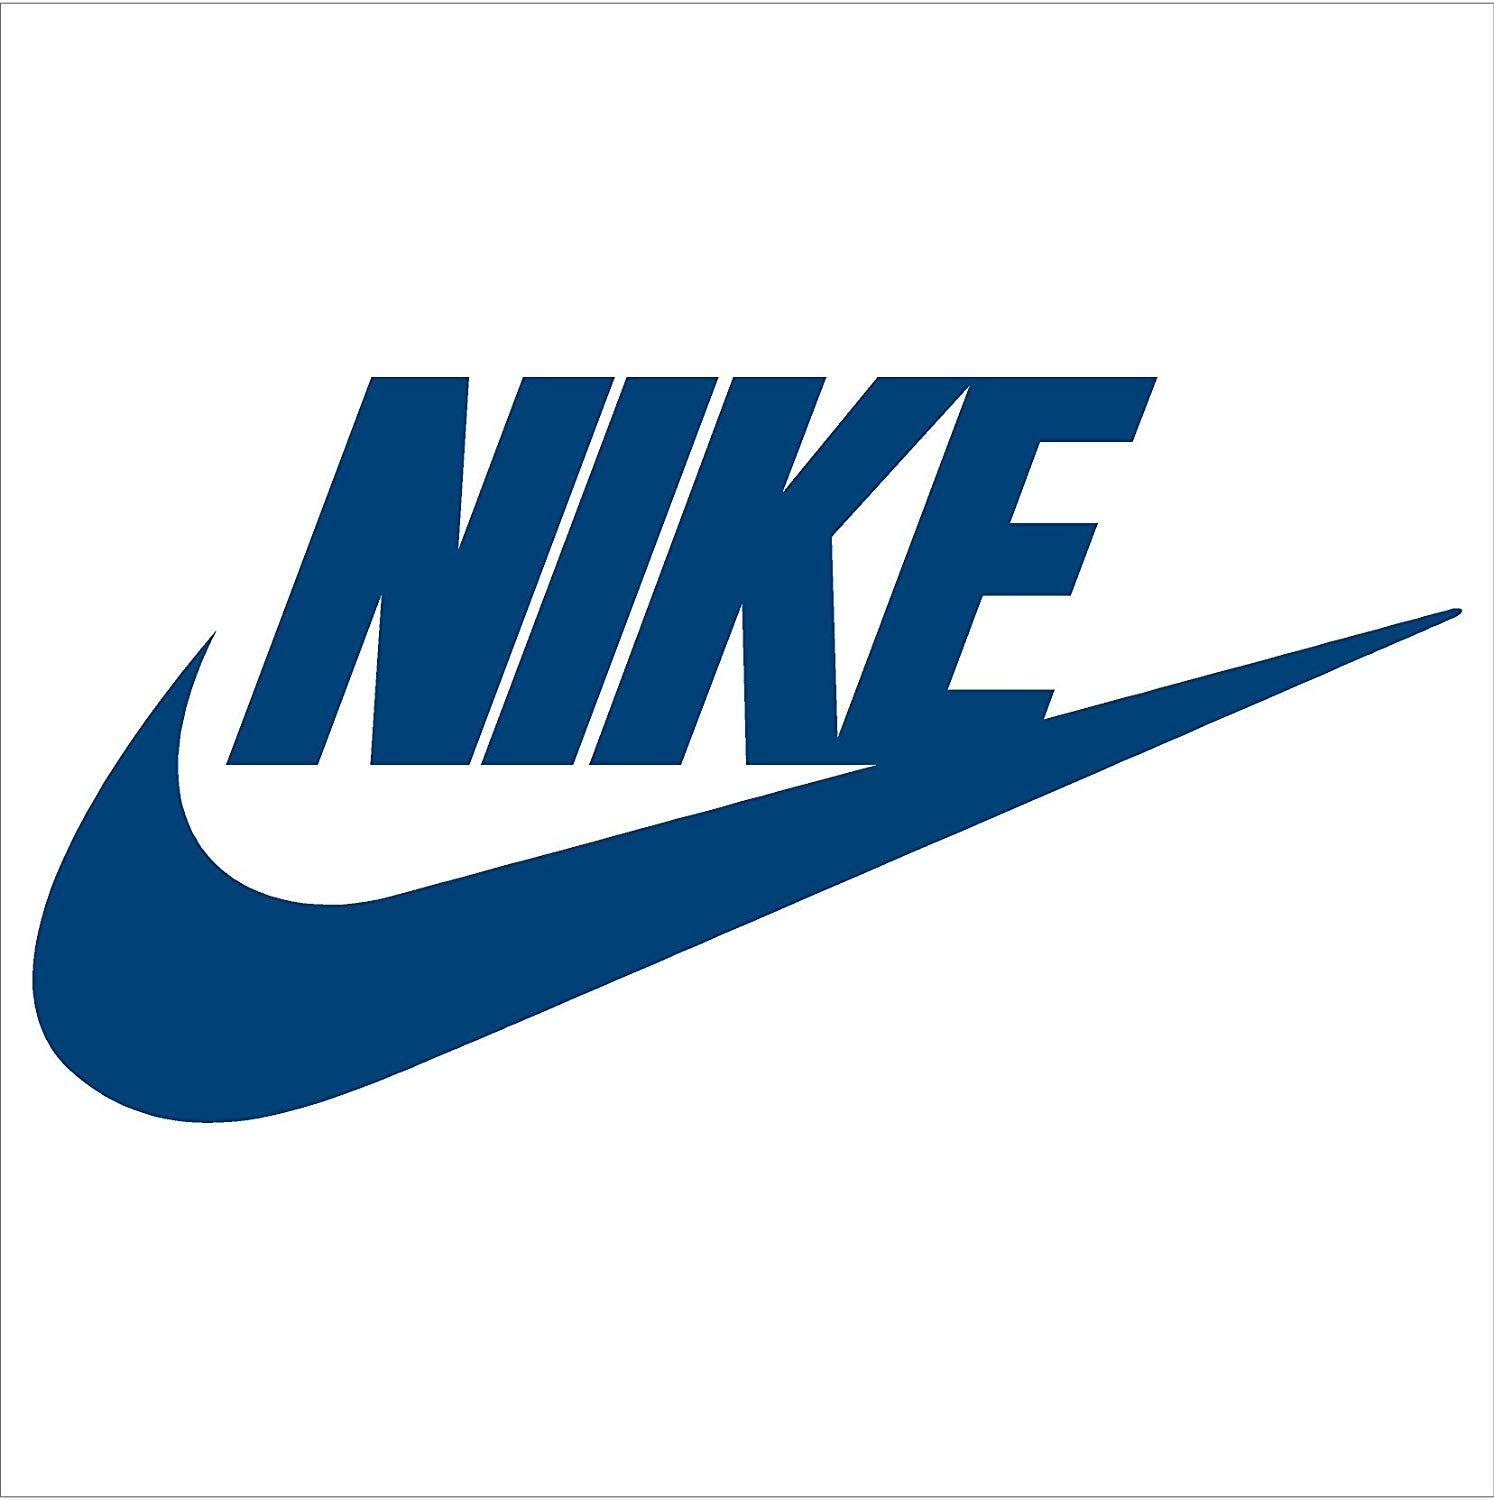 Nilke Logo - Nike Swoosh Logo Vinyl Sticker Decal Orange 4 Inch